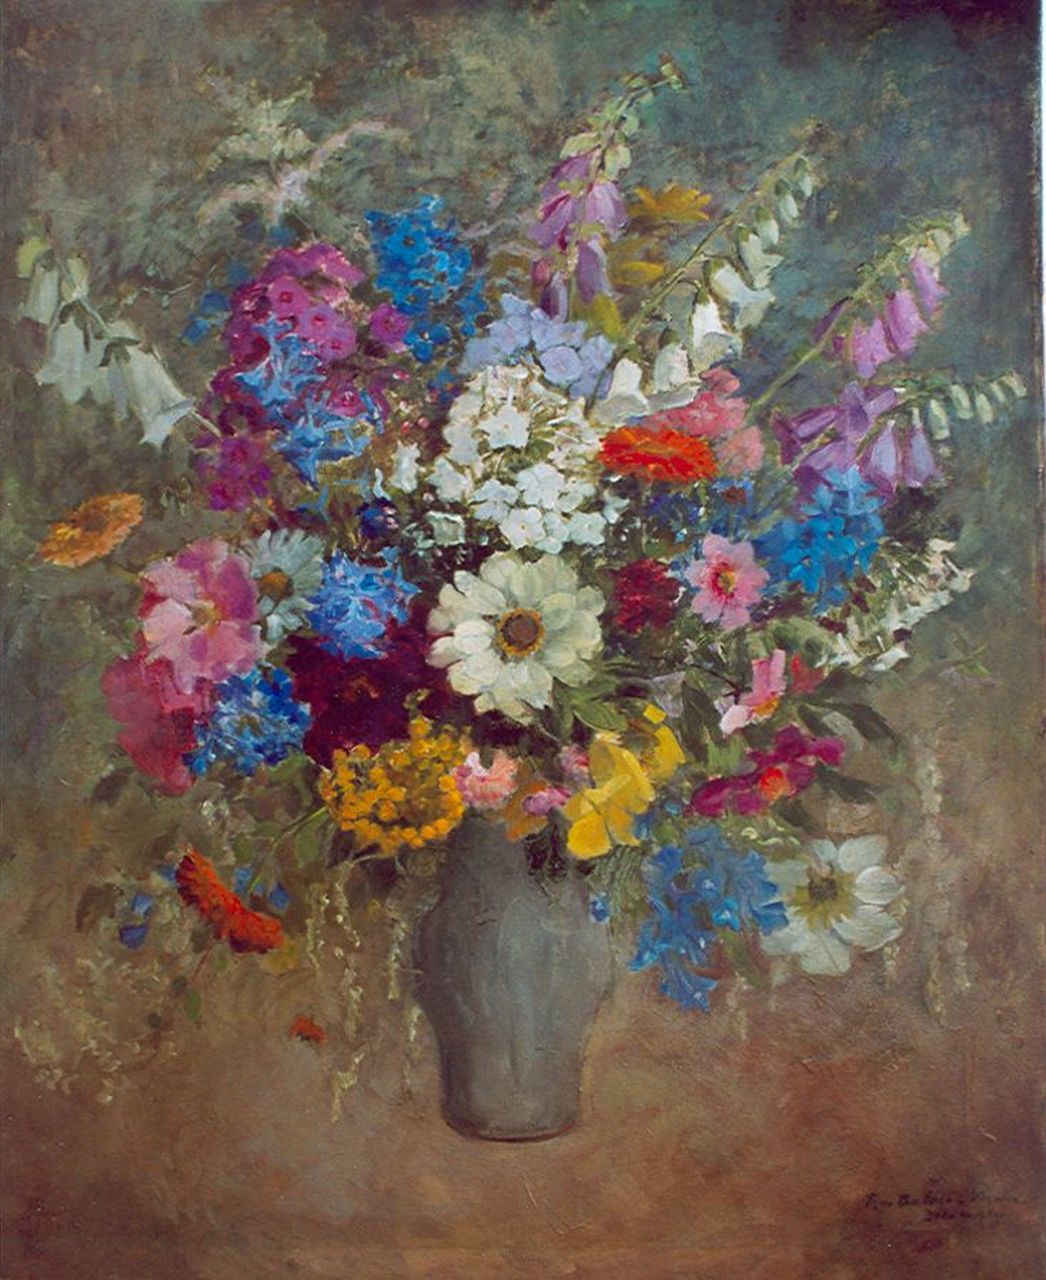 Rie de Balbian Verster-Bolderhey | Field flowers in a vase, Öl auf Leinwand, 99,5 x 79,5 cm, signed l.r.